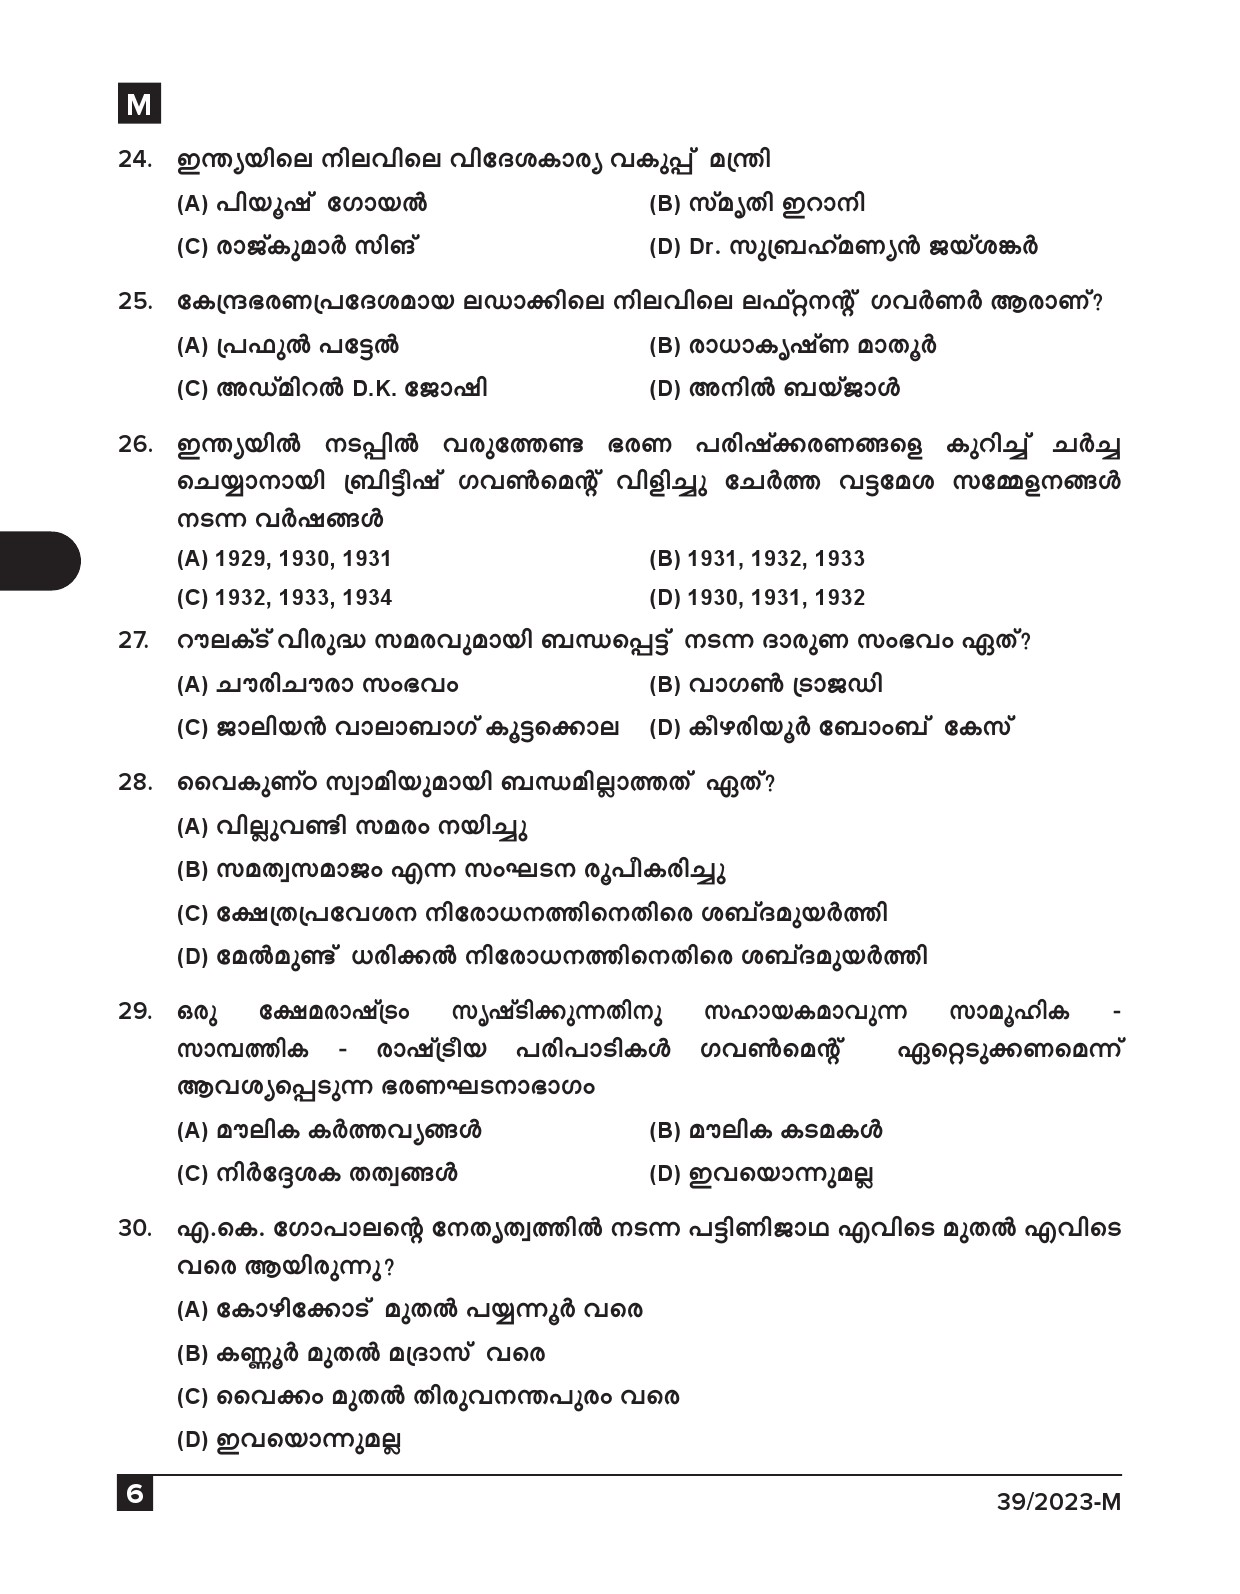 KPSC Ayah Attender Work Assistant Malayalam Exam 2023 Code 0392023 M 5